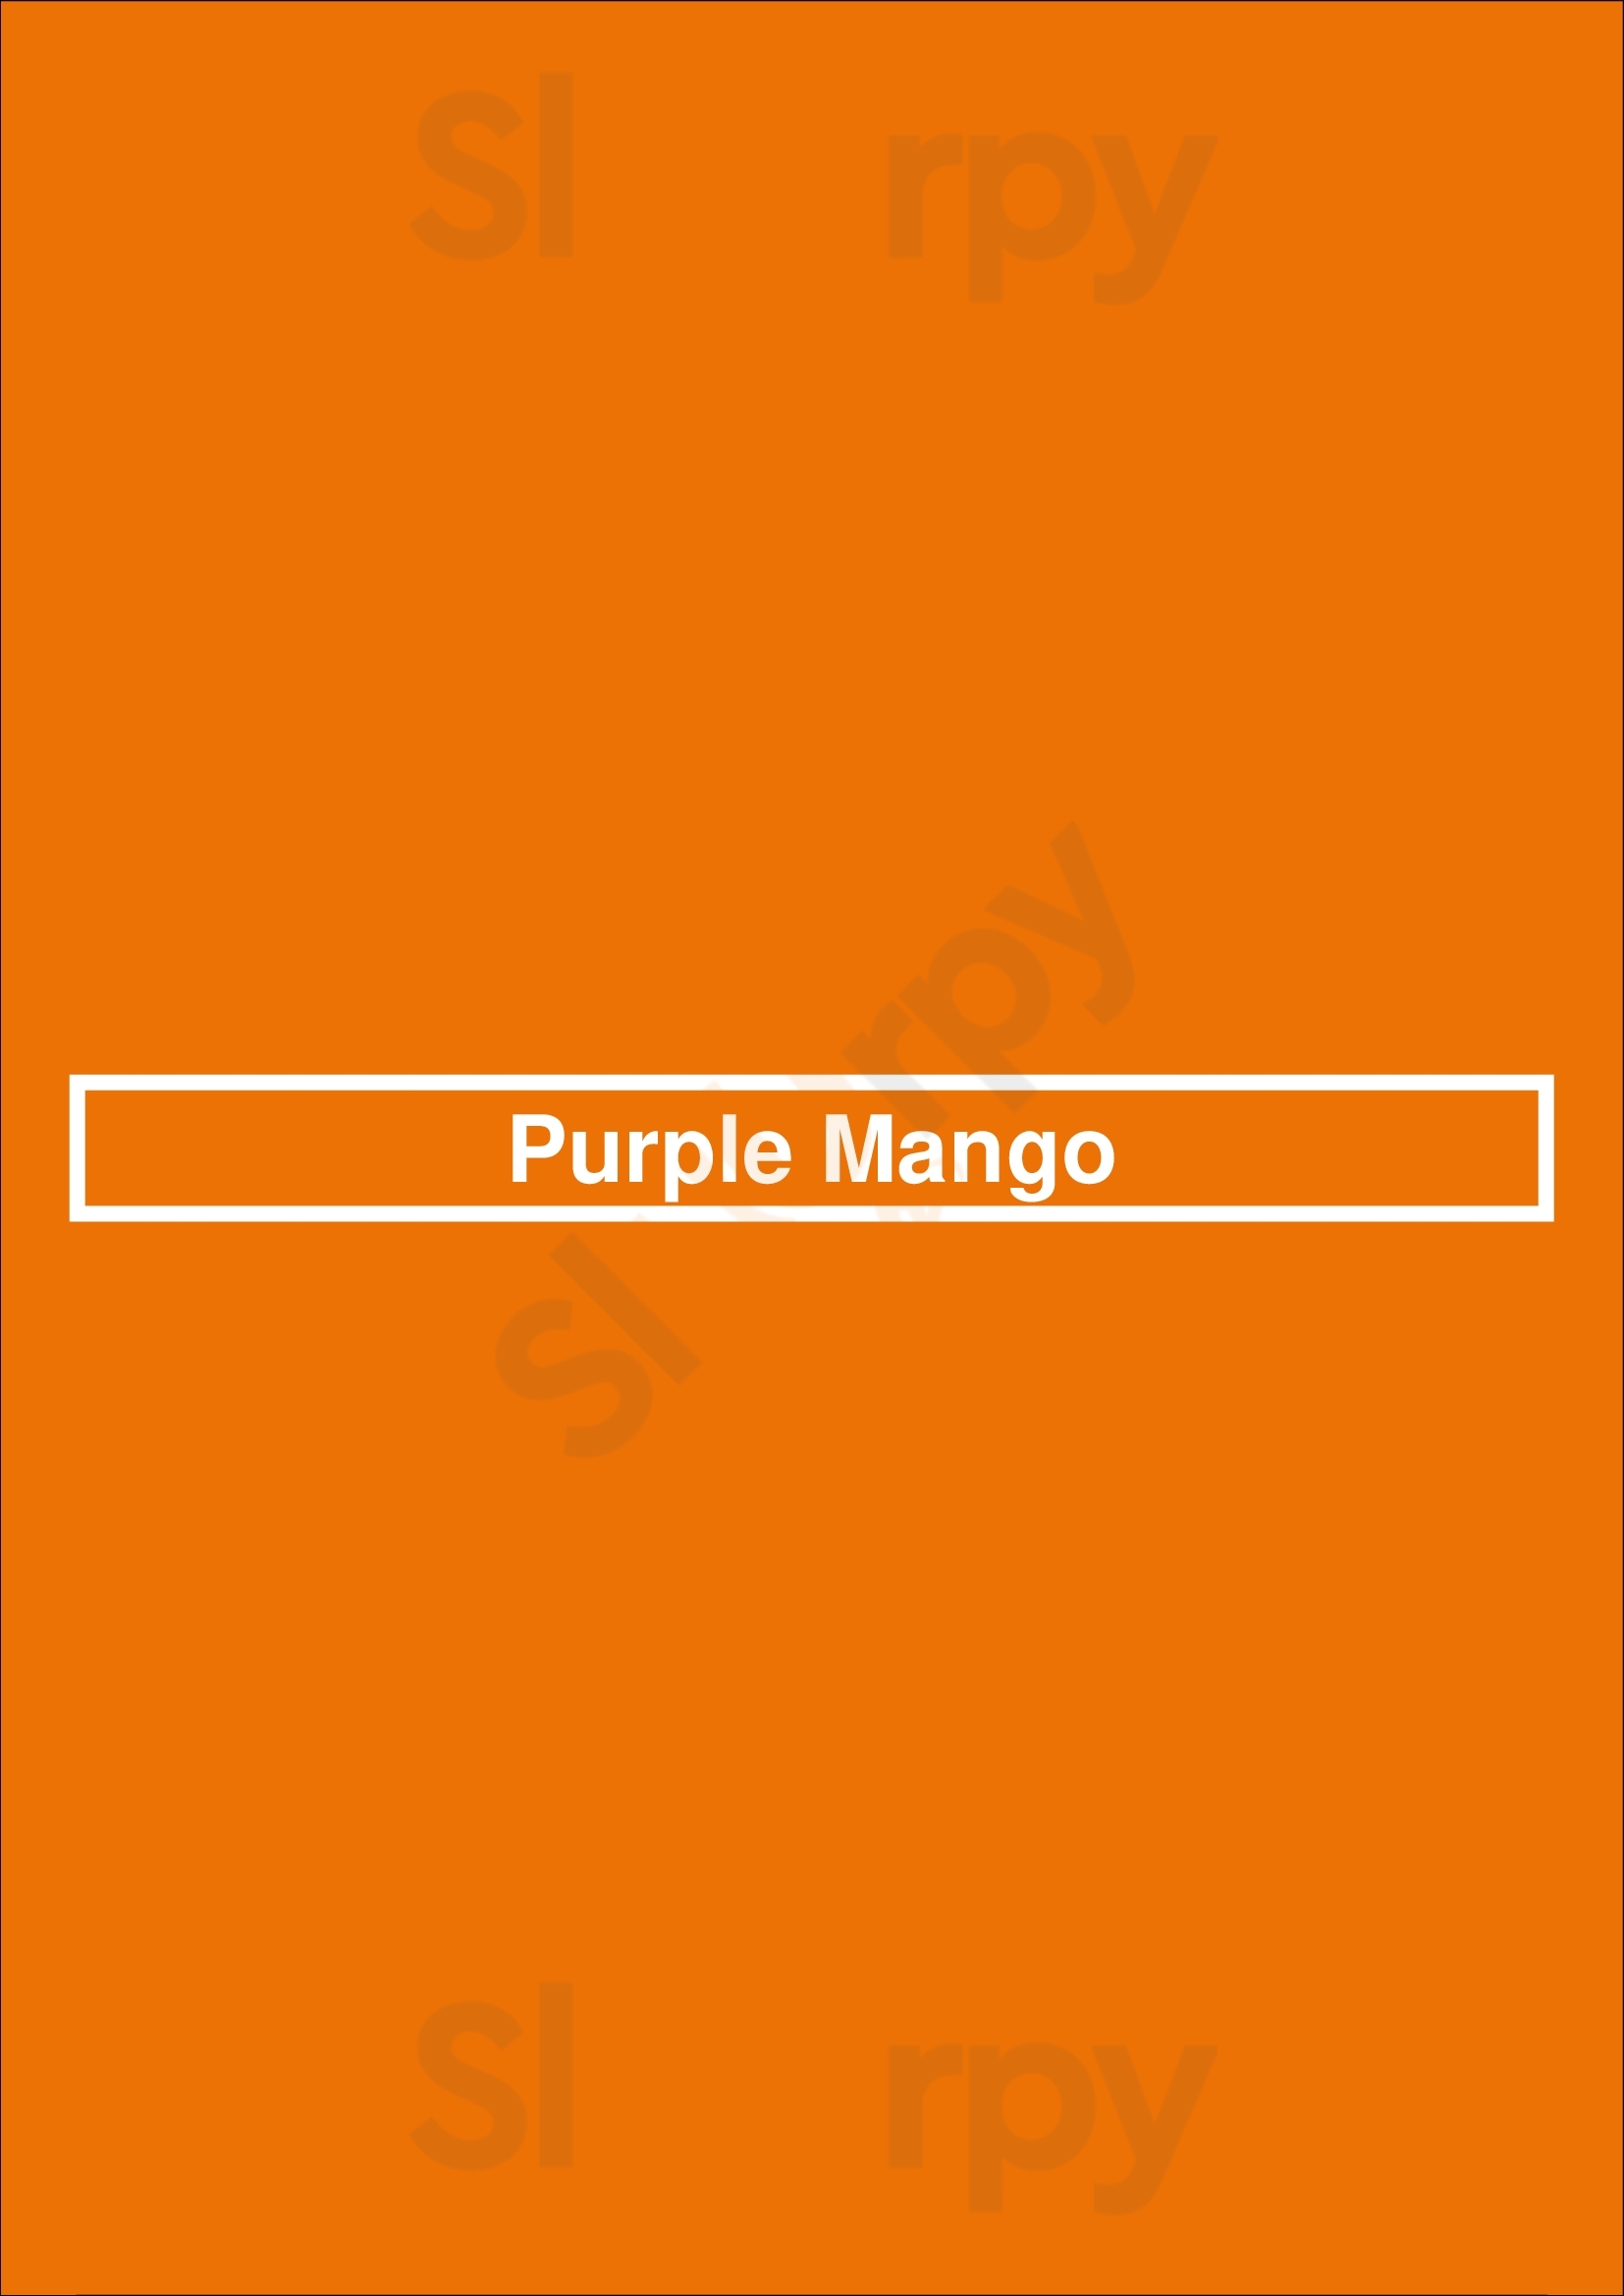 Purple Mango London Menu - 1